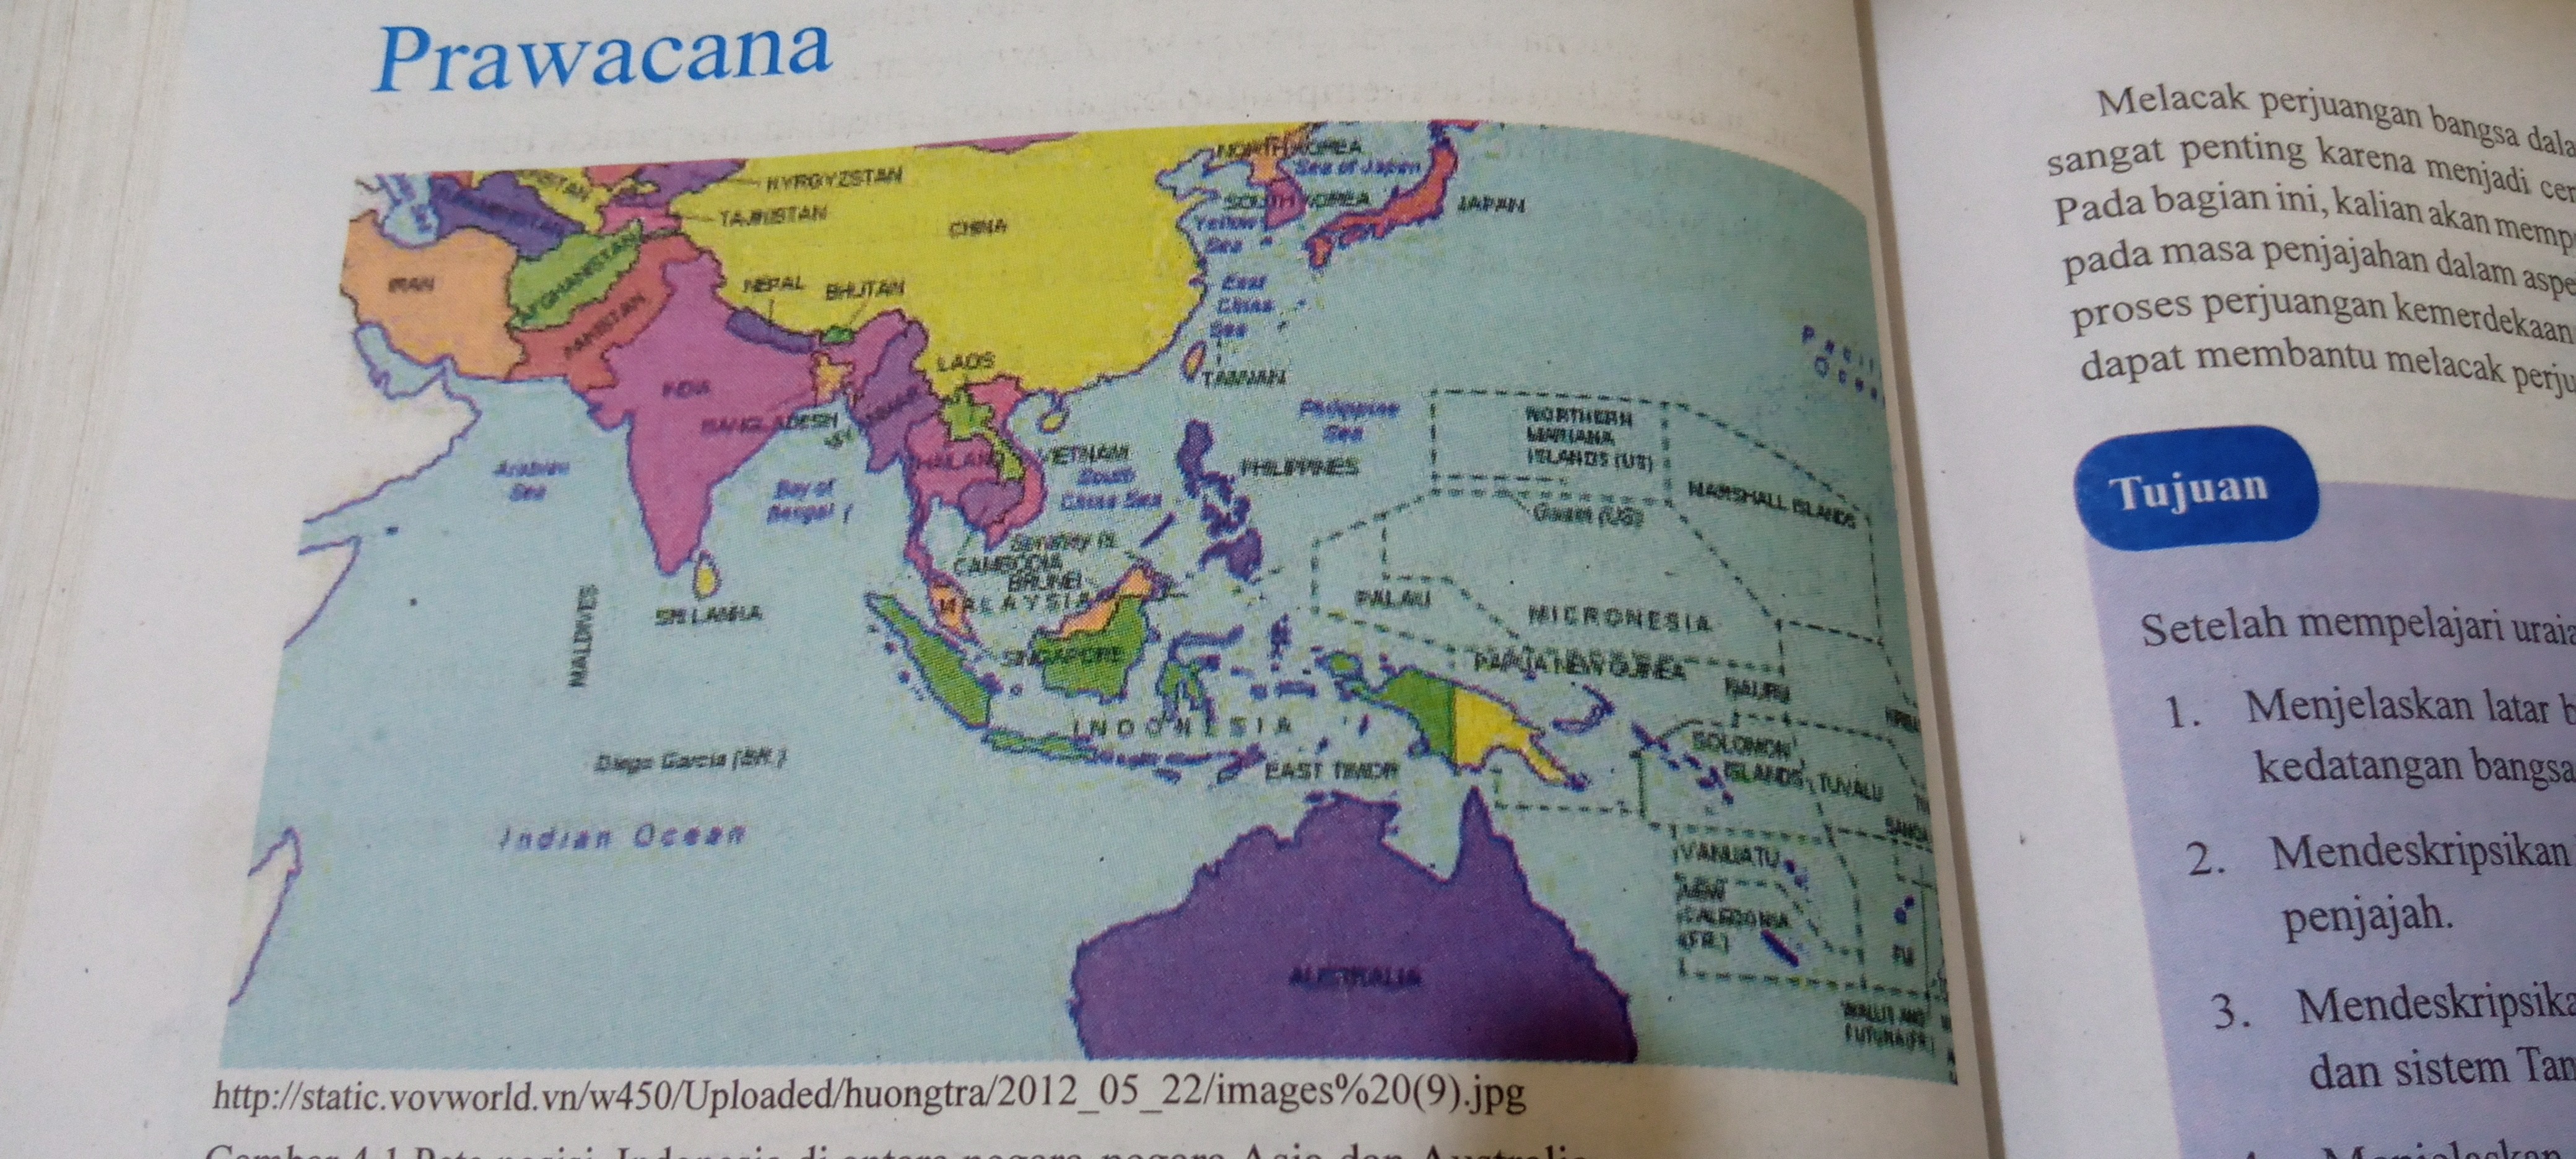 Geografis yang kepulauan yang berbentuk adalah ciri terpisah-pisah satu asean disebut negara-negara salah negara ASEAN